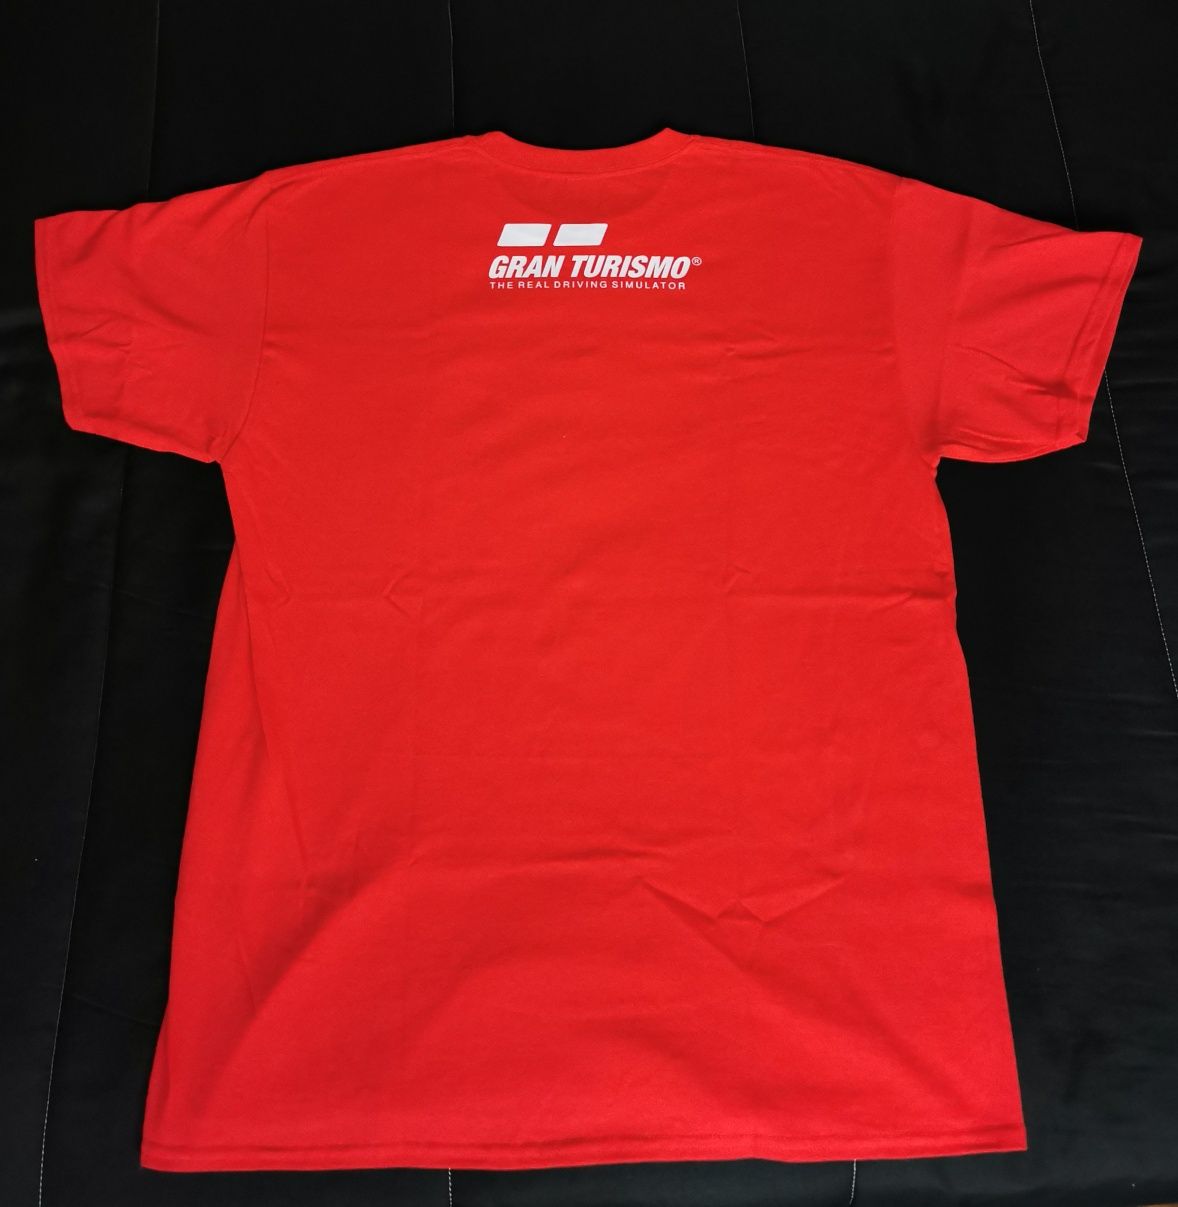 T-shirt do campeonato mundial de Gran Turismo 2022